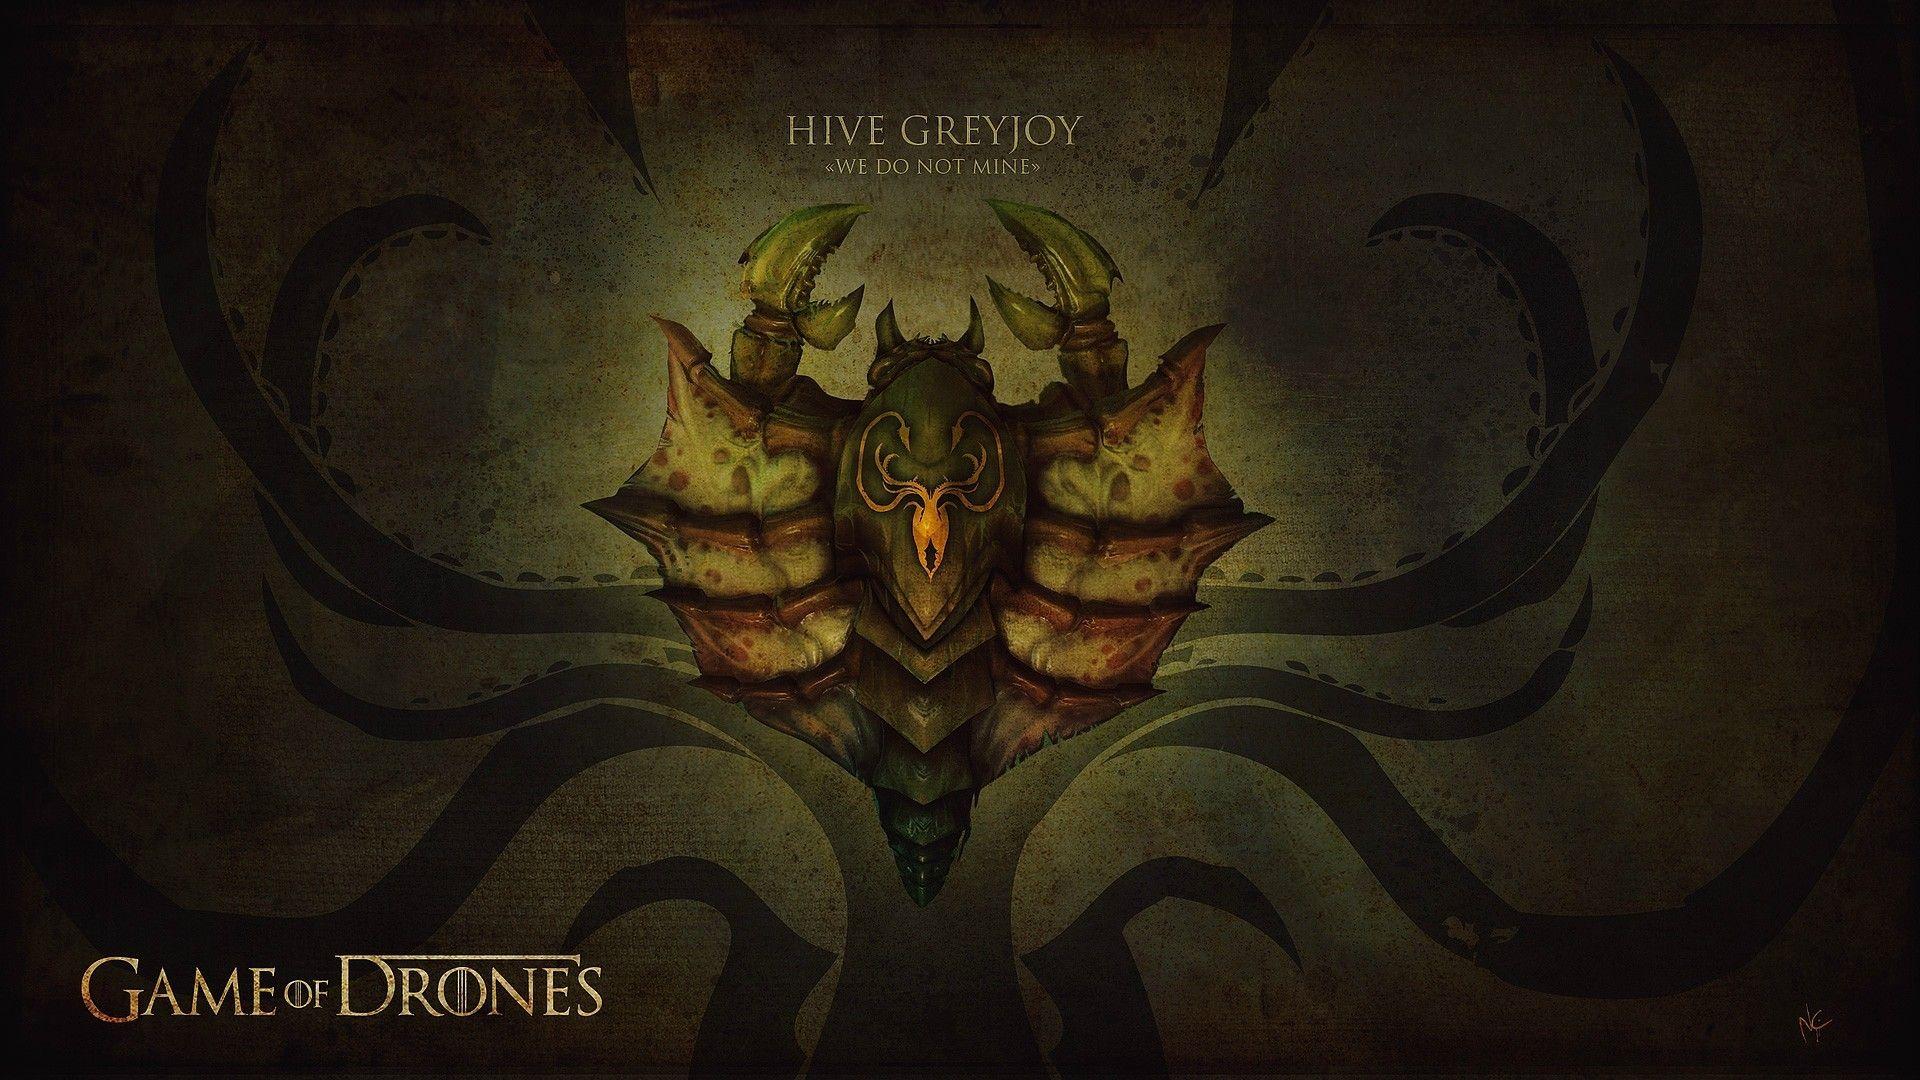 Game of Thrones  4k Wallpaper  House Greyjoy by AKSensei on DeviantArt